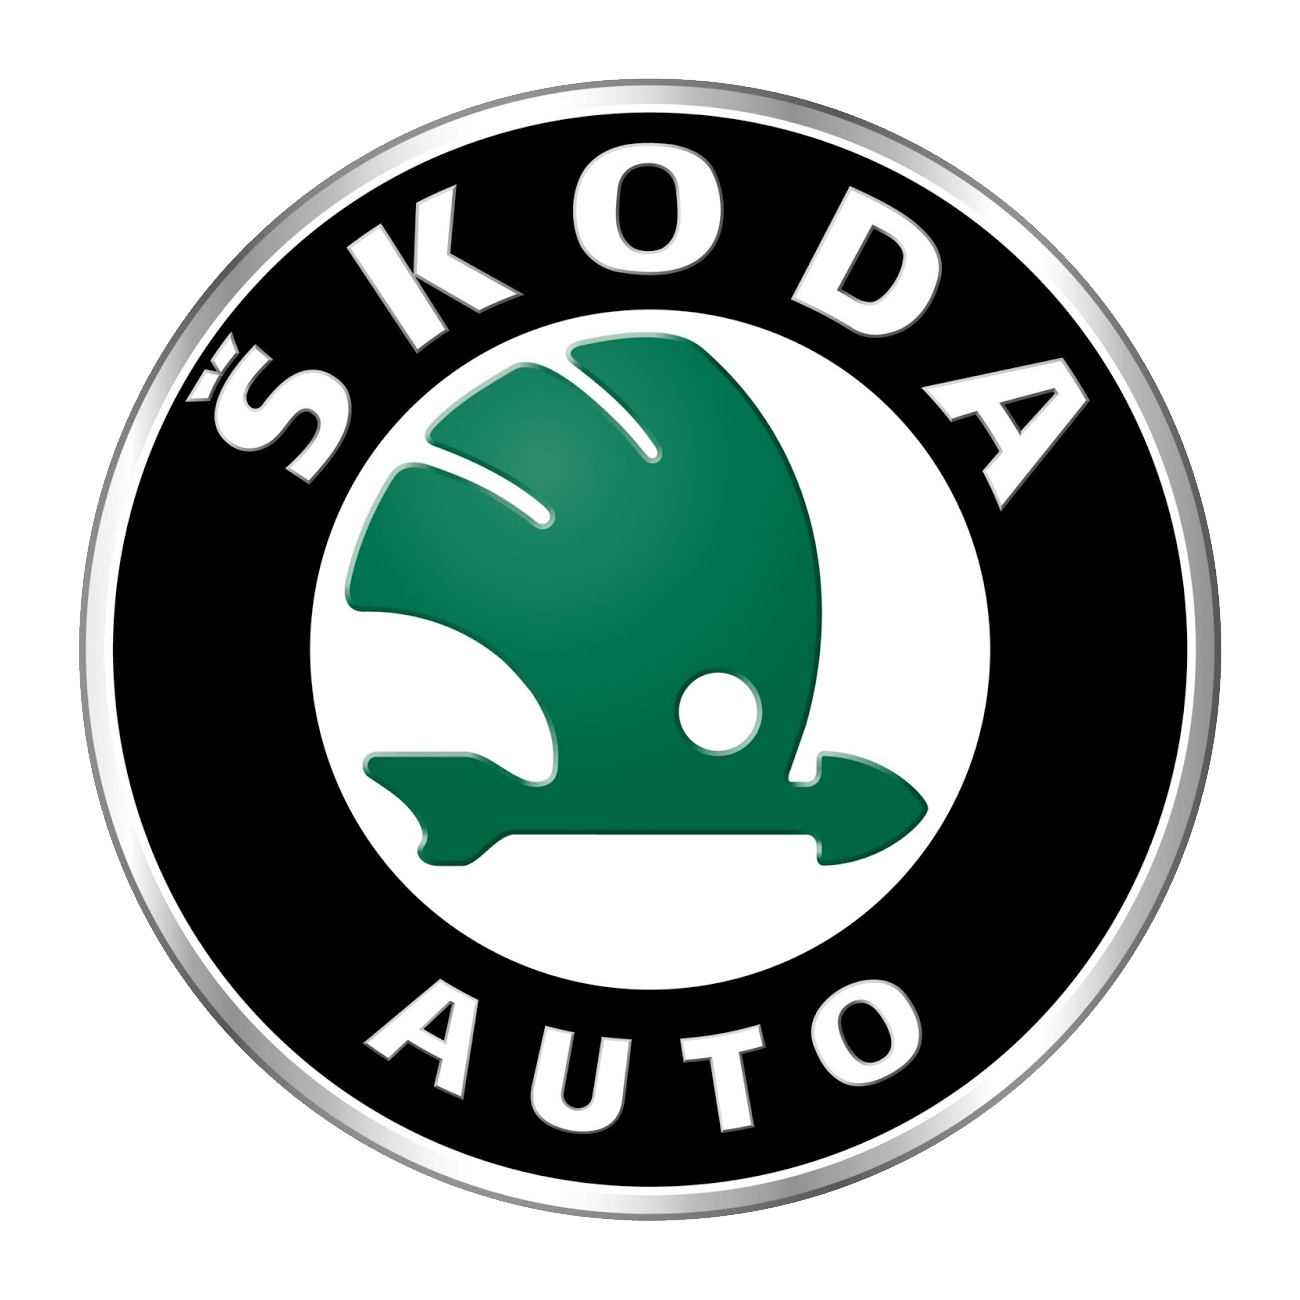 Skoda Logo Png Transparent &a